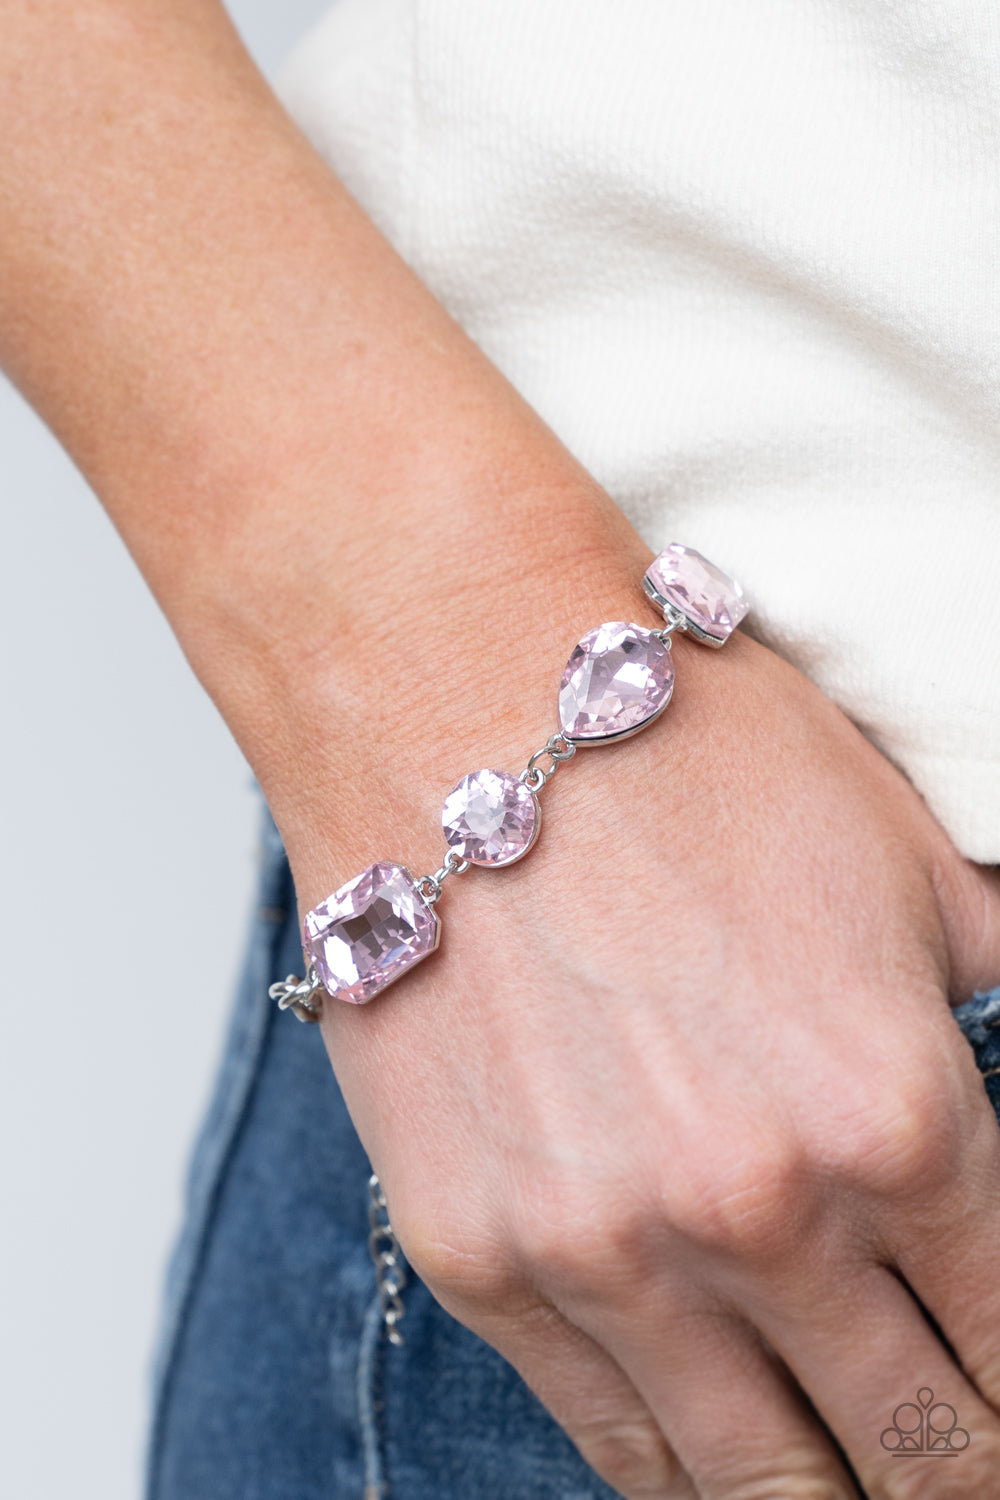 Paparazzi Accessories Cosmic Treasure Chest - Pink Bracelets - Lady T Accessories